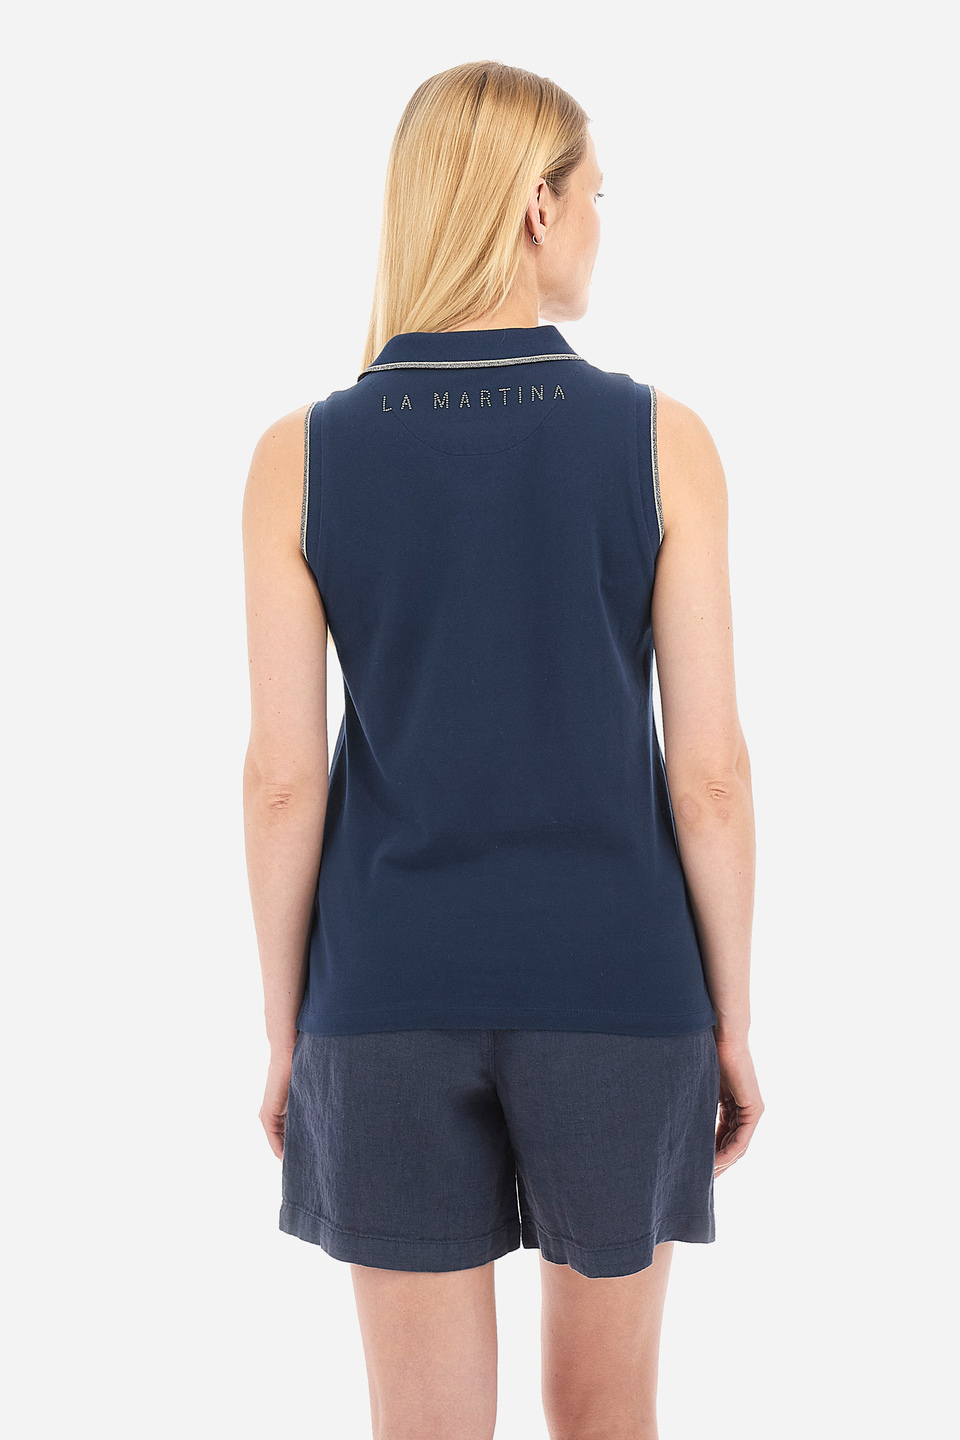 Polo donna cotone regular fit - Vinetta | La Martina - Official Online Shop